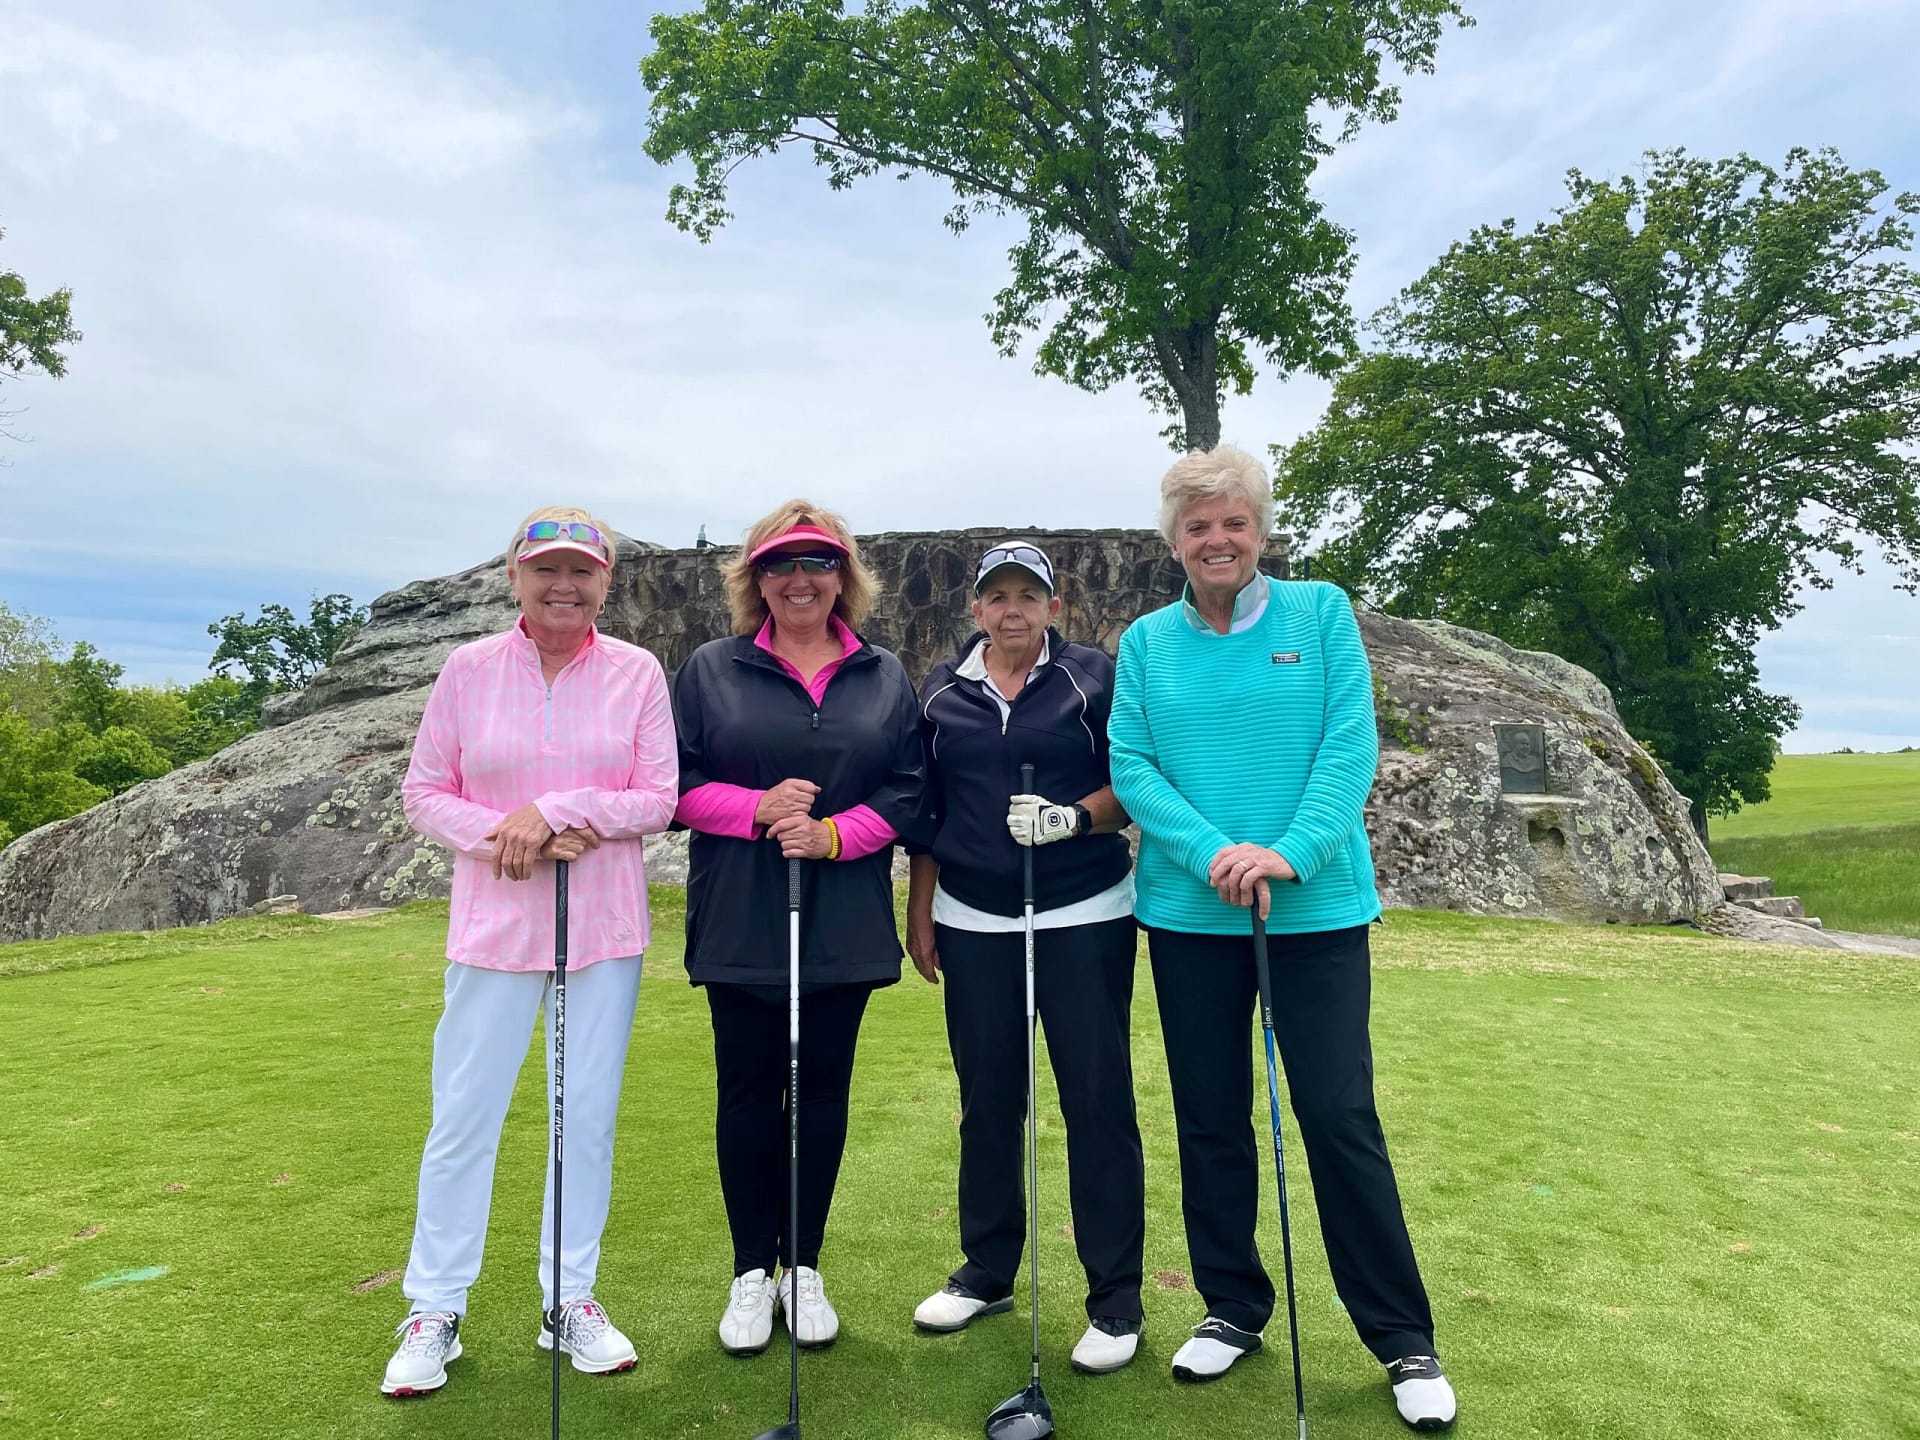 4 Senior ladies playing golf together